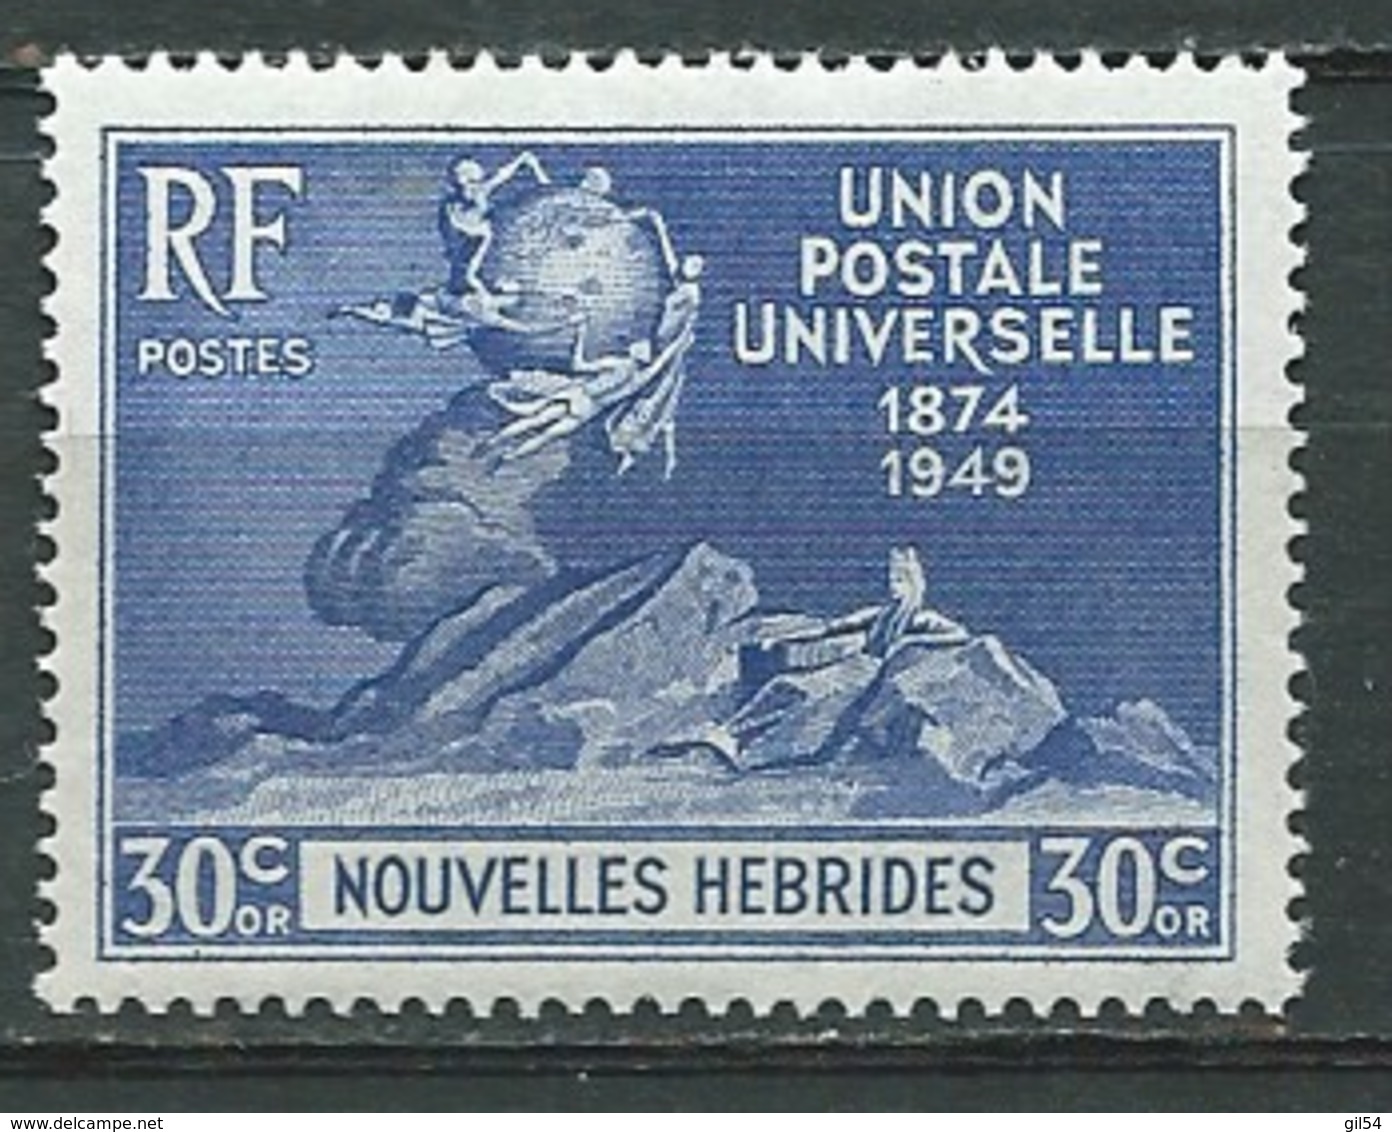 Nouvelles Hébrides - Yvert N° 138 ** -  Abc 29717 - Nuovi